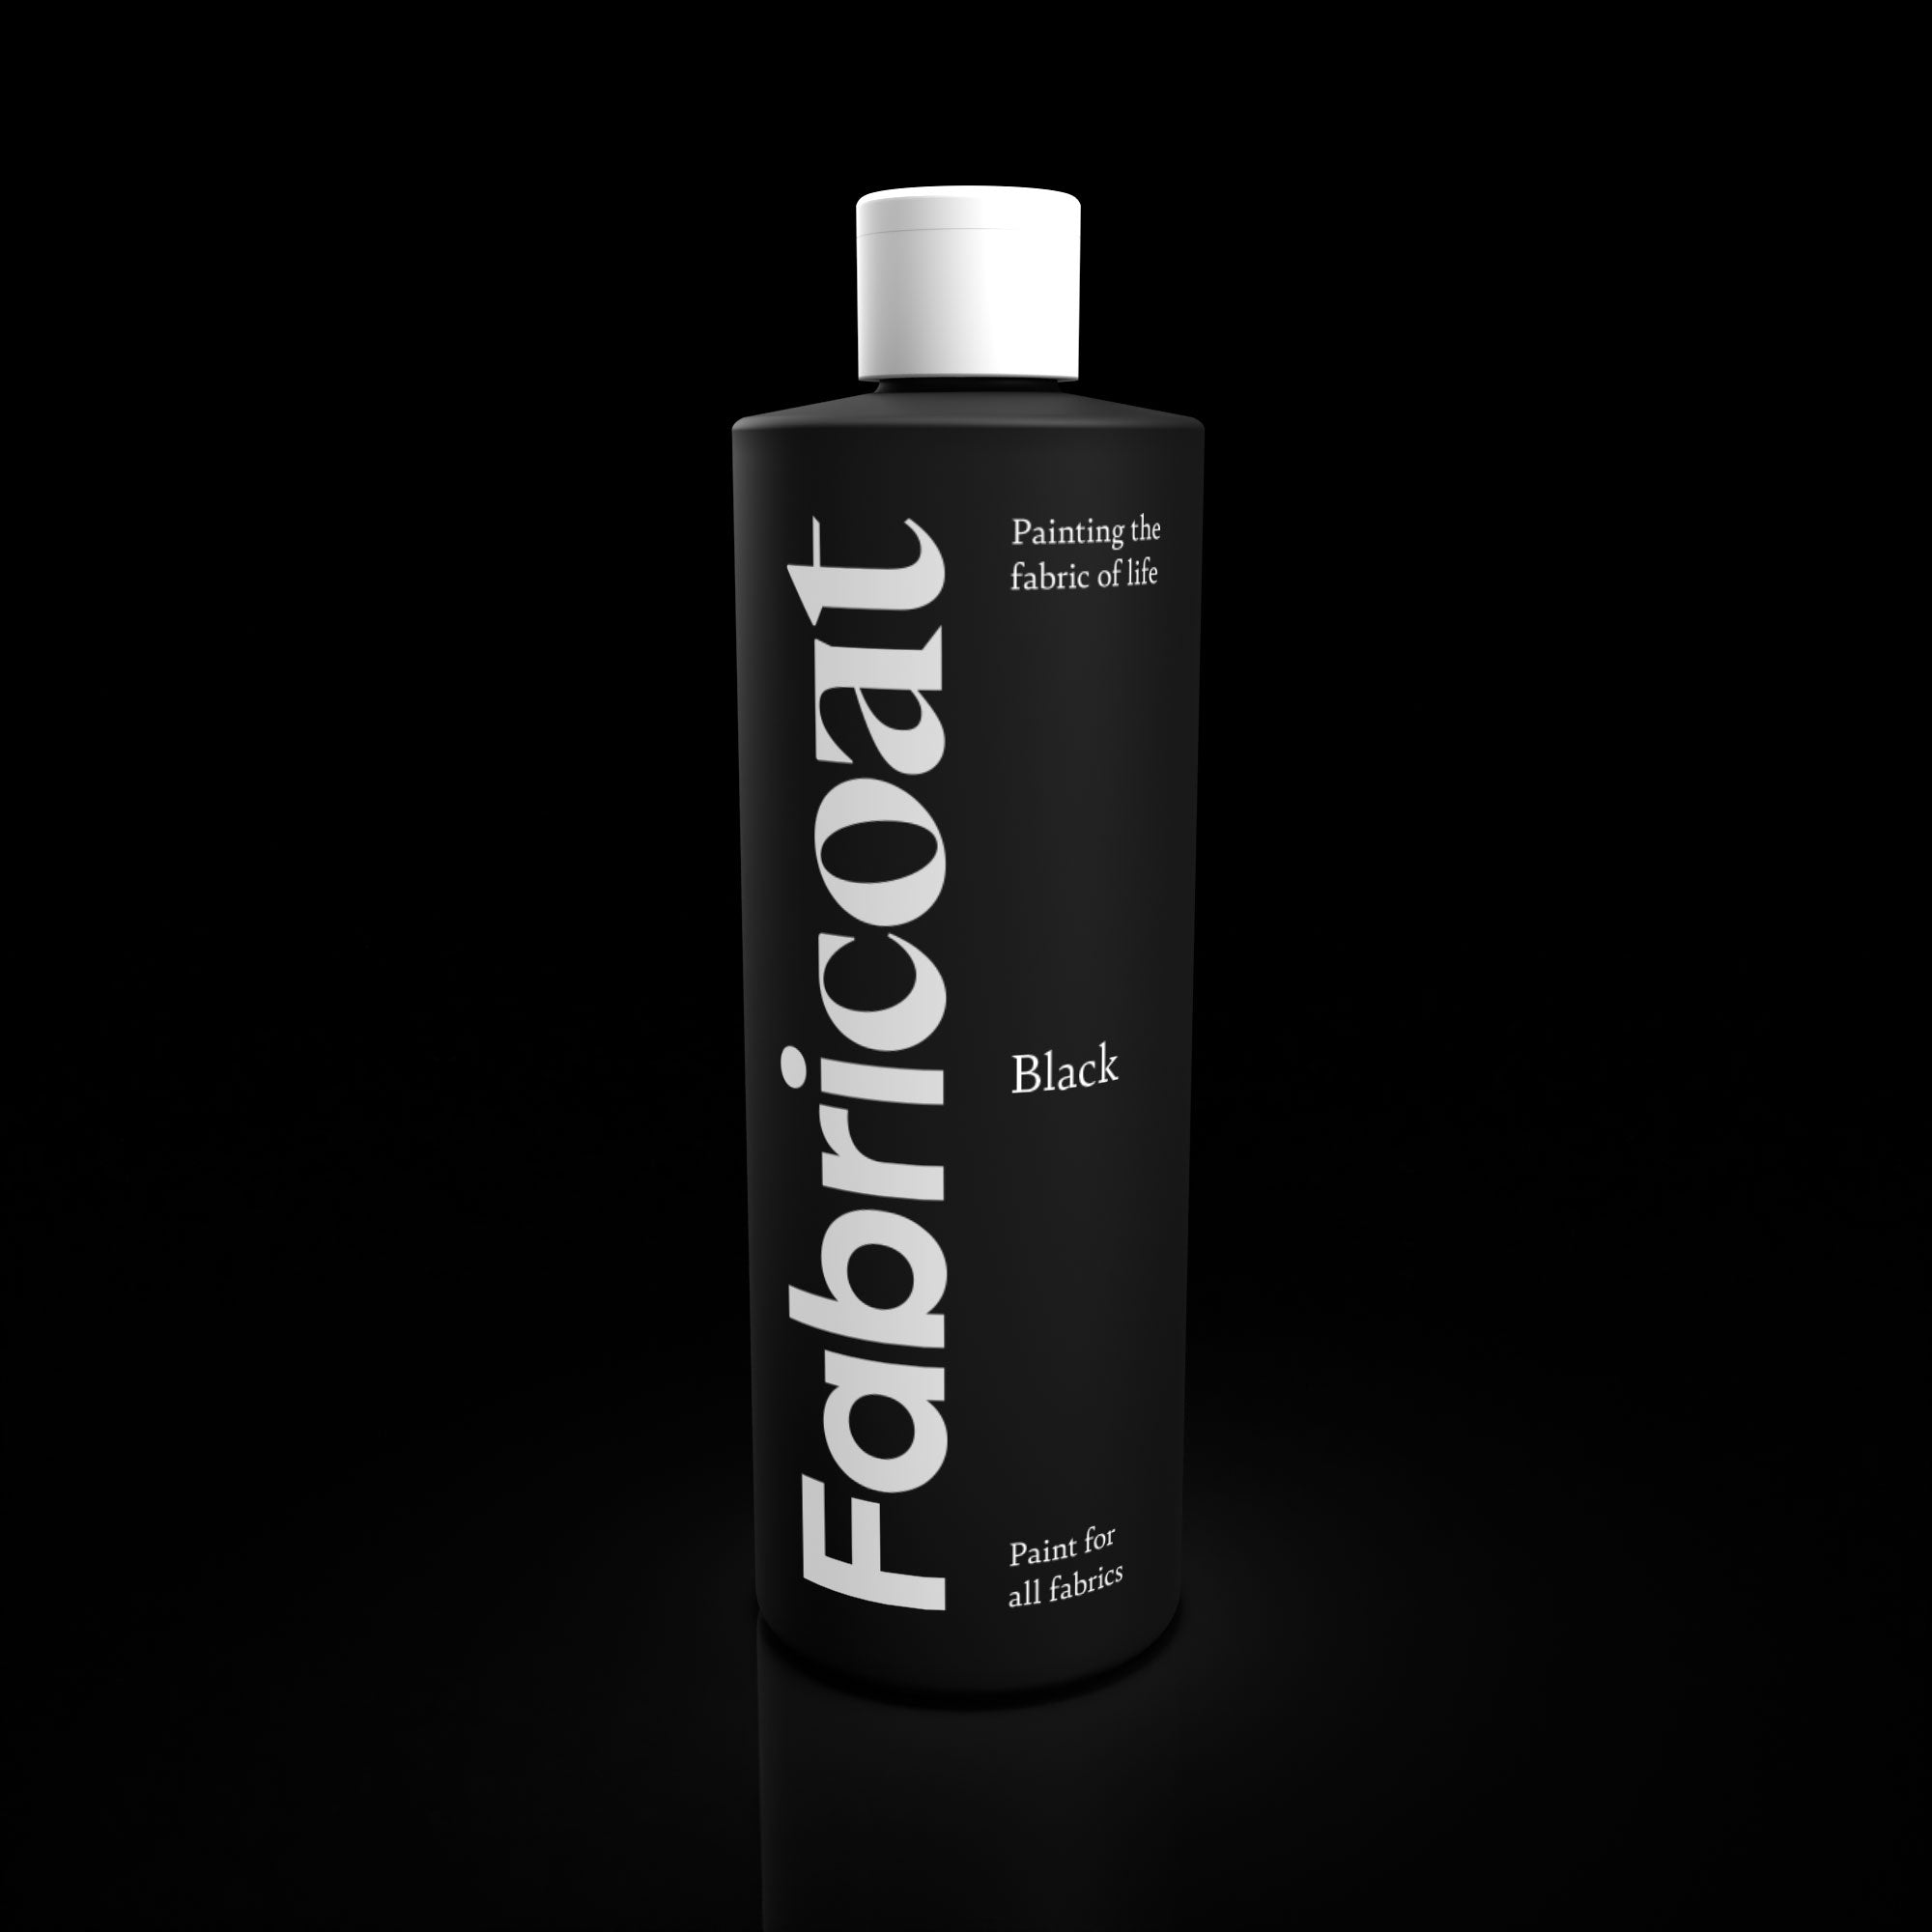 Fabricoat Black Fabric Paint 500ml Bottle